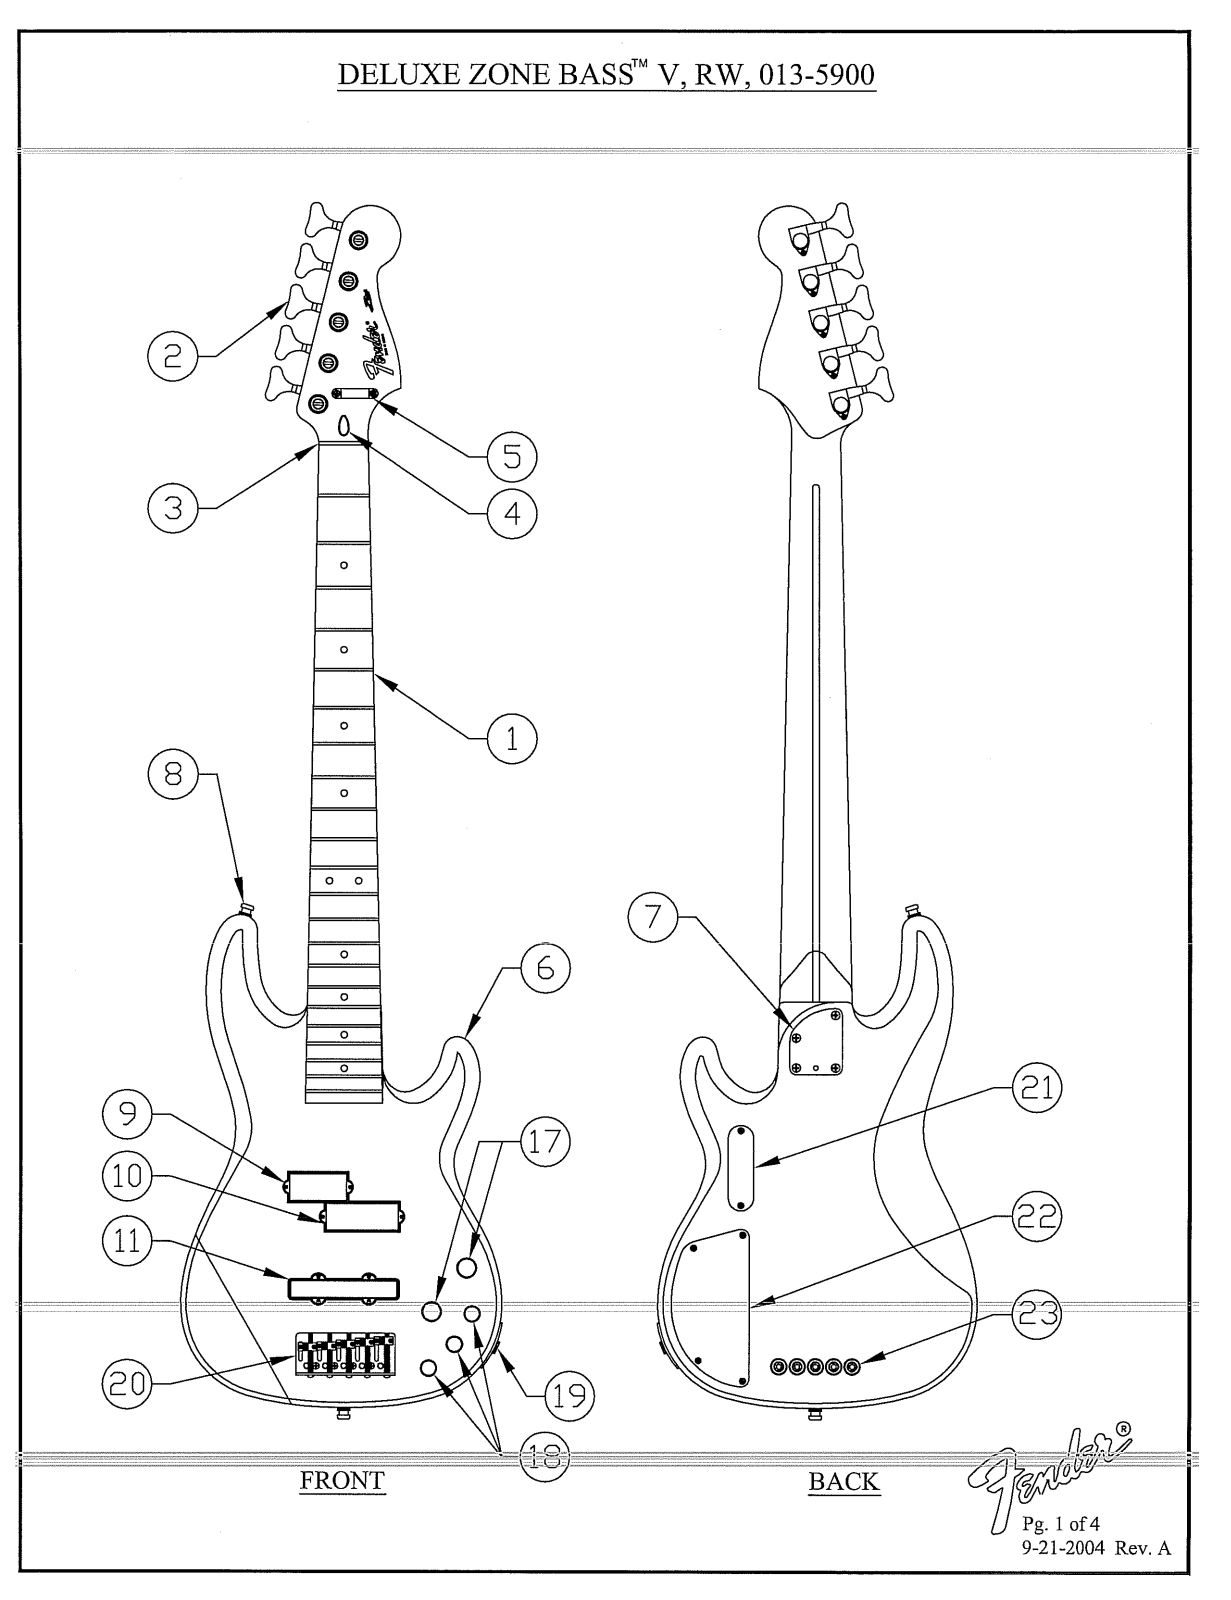 Fender Deluxe-Zone-Bass-V Service Manual